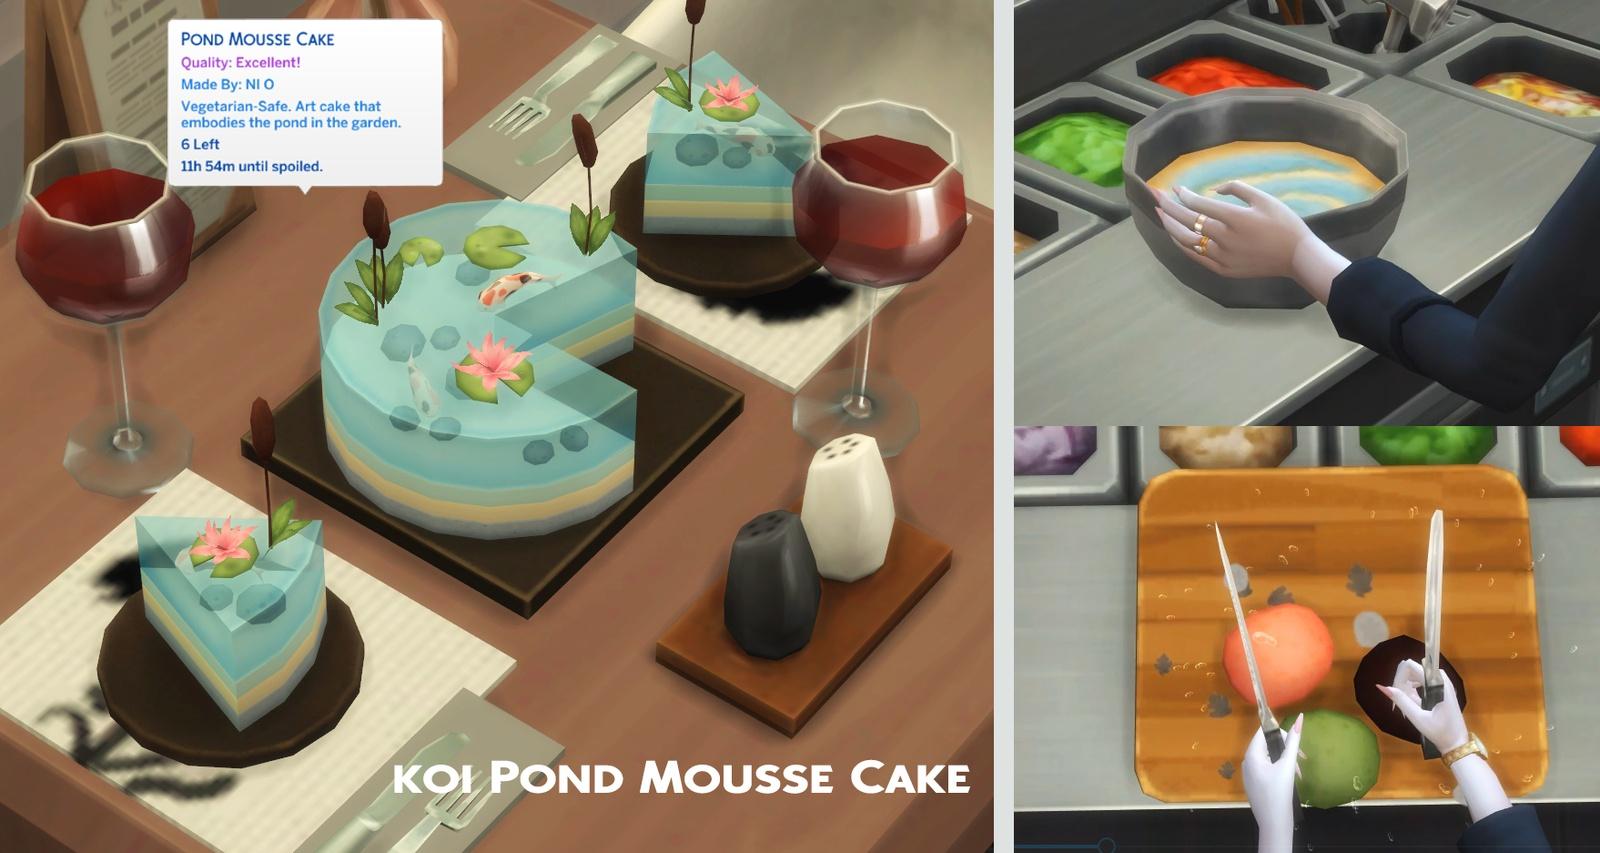 may 2022 recipe koi pond mousse cake oni